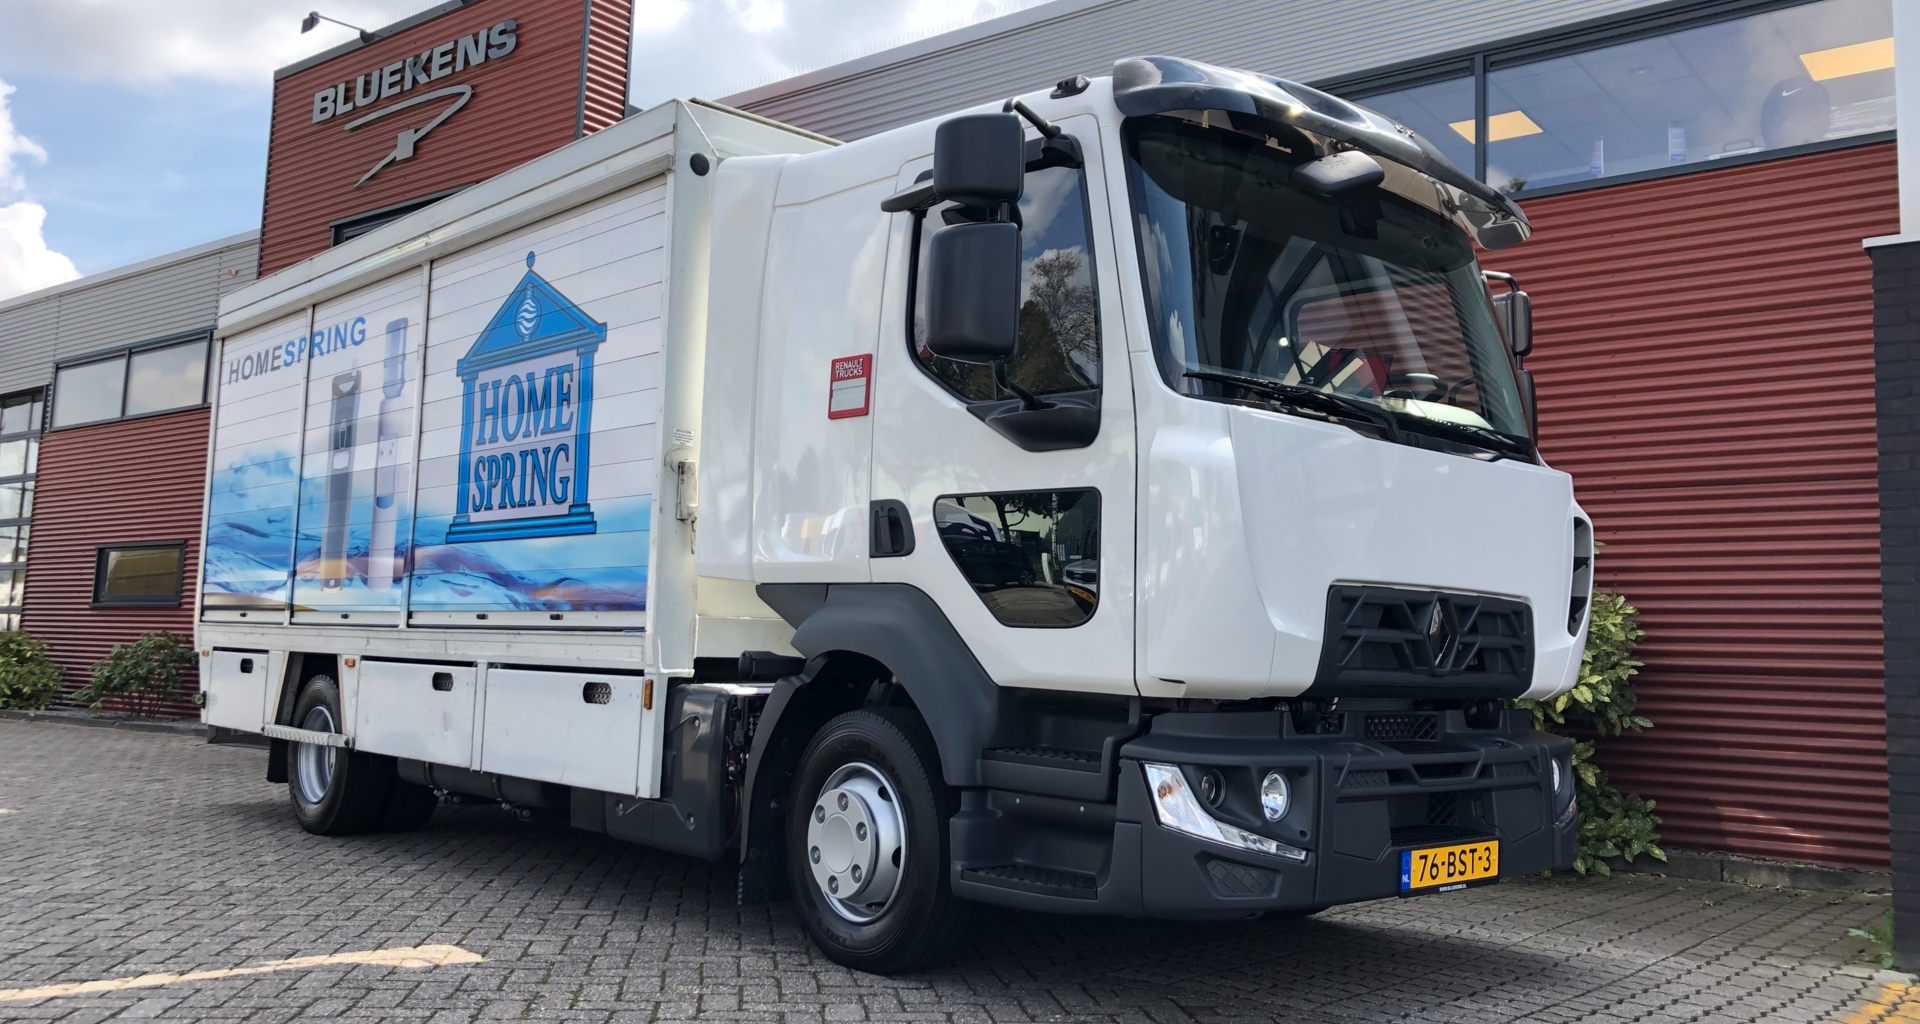 Bluekens_Homespring_Renault_Truck_D